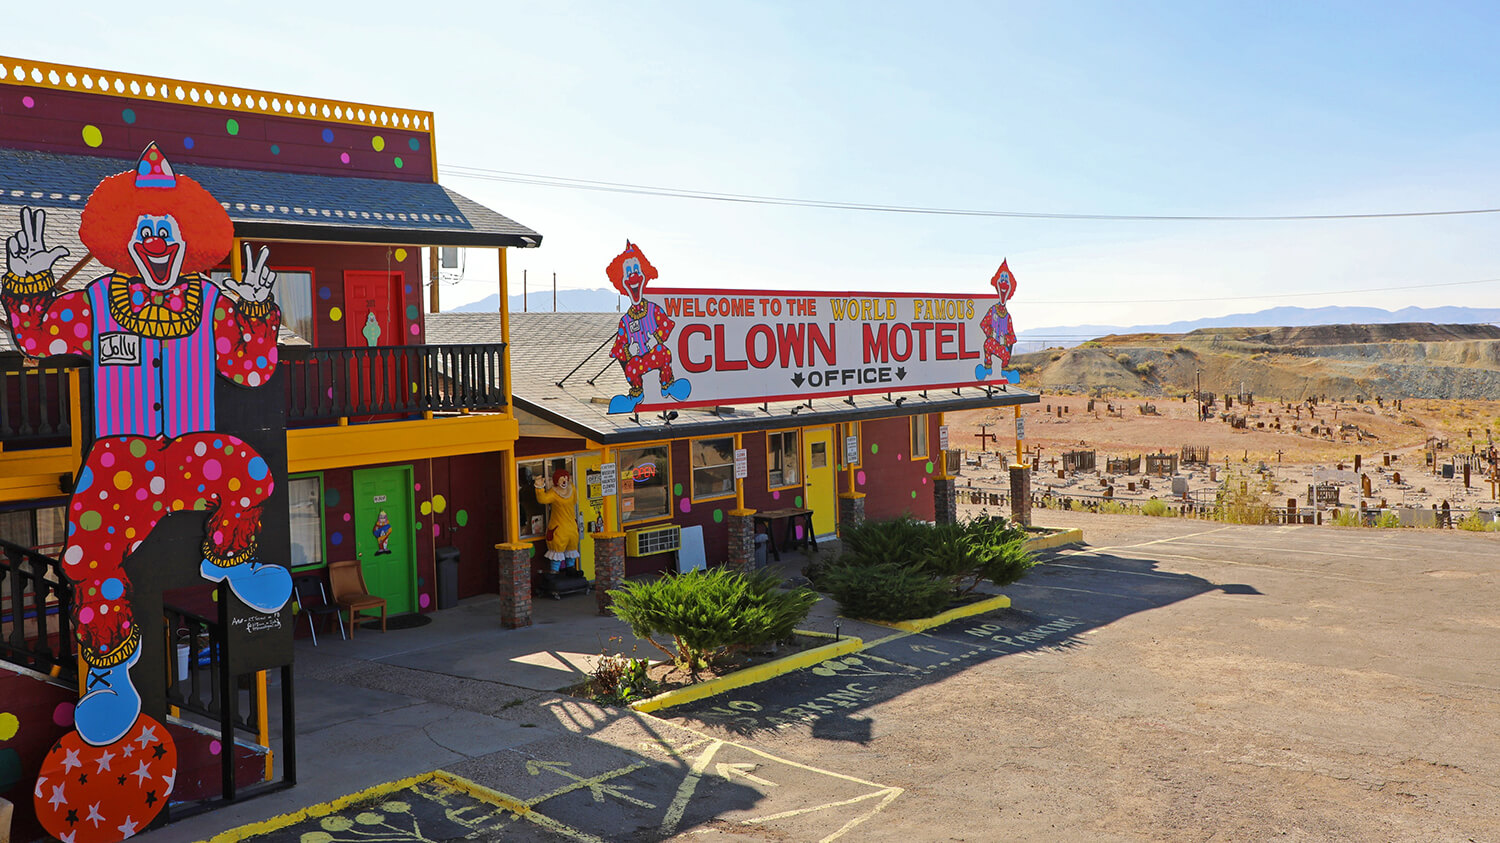 Clown Motel in Tonopah, NV | The Clown Motel | Travel Nevada